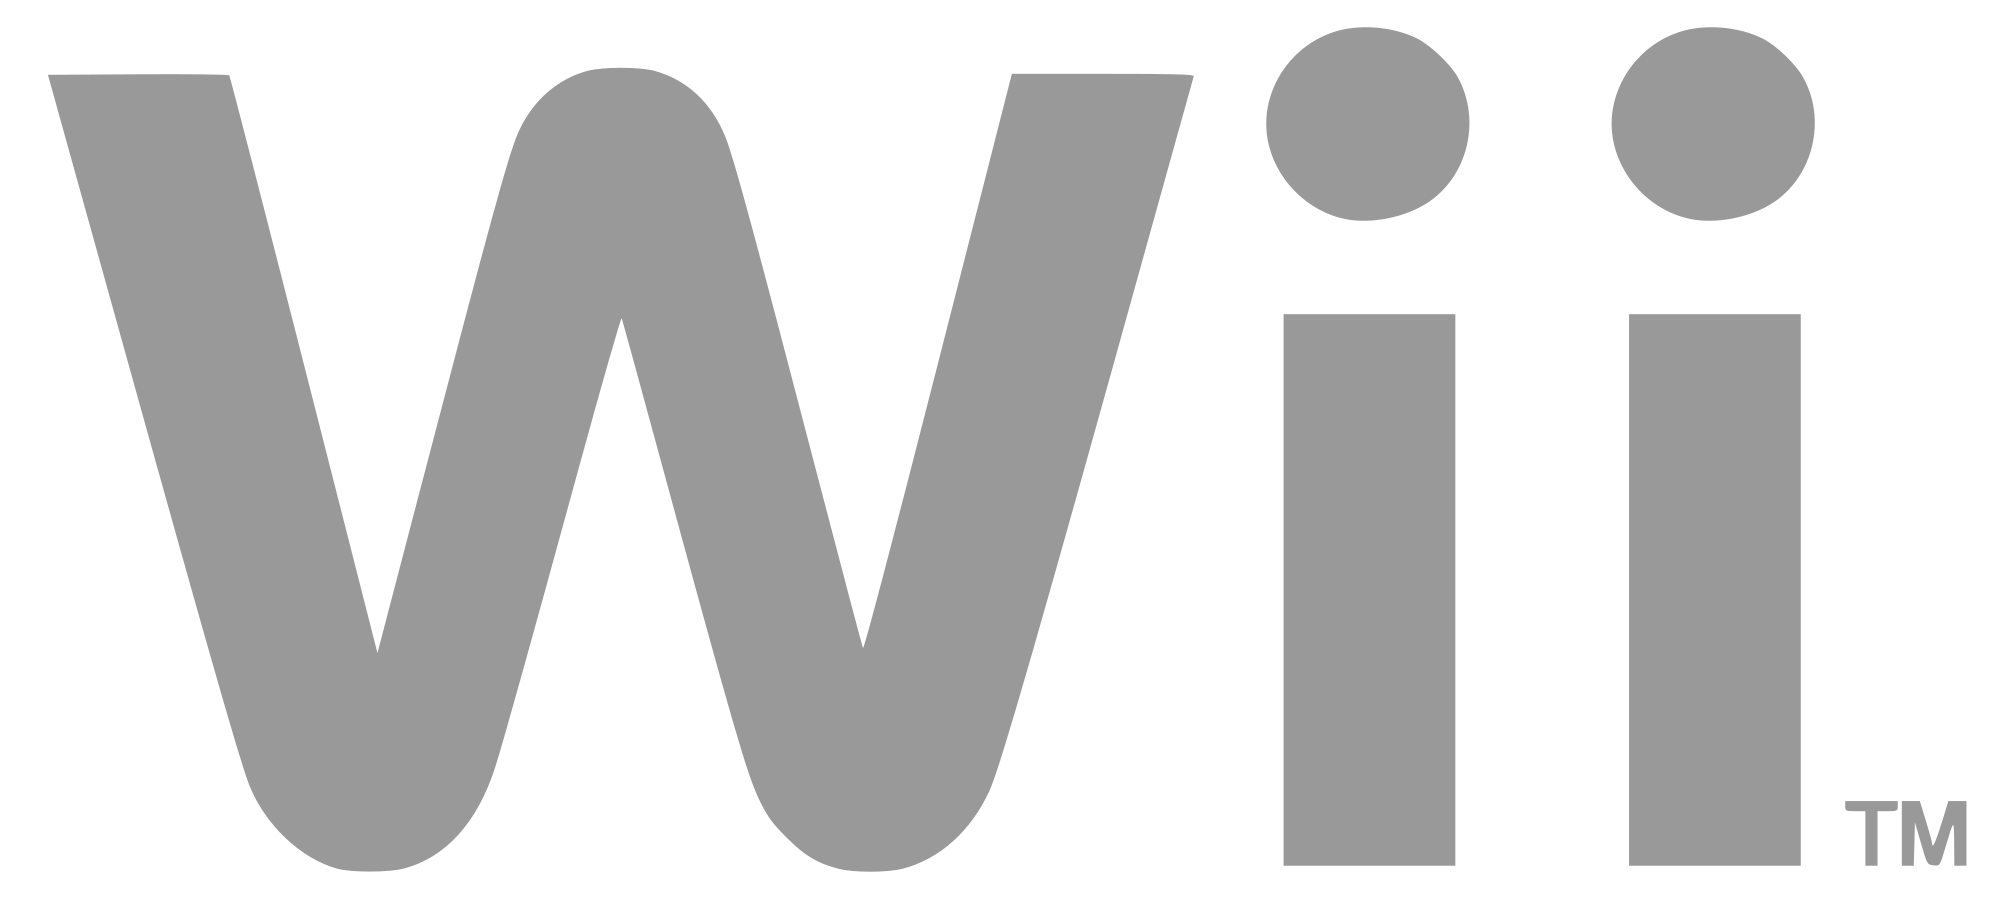 File:Wii logo.png.